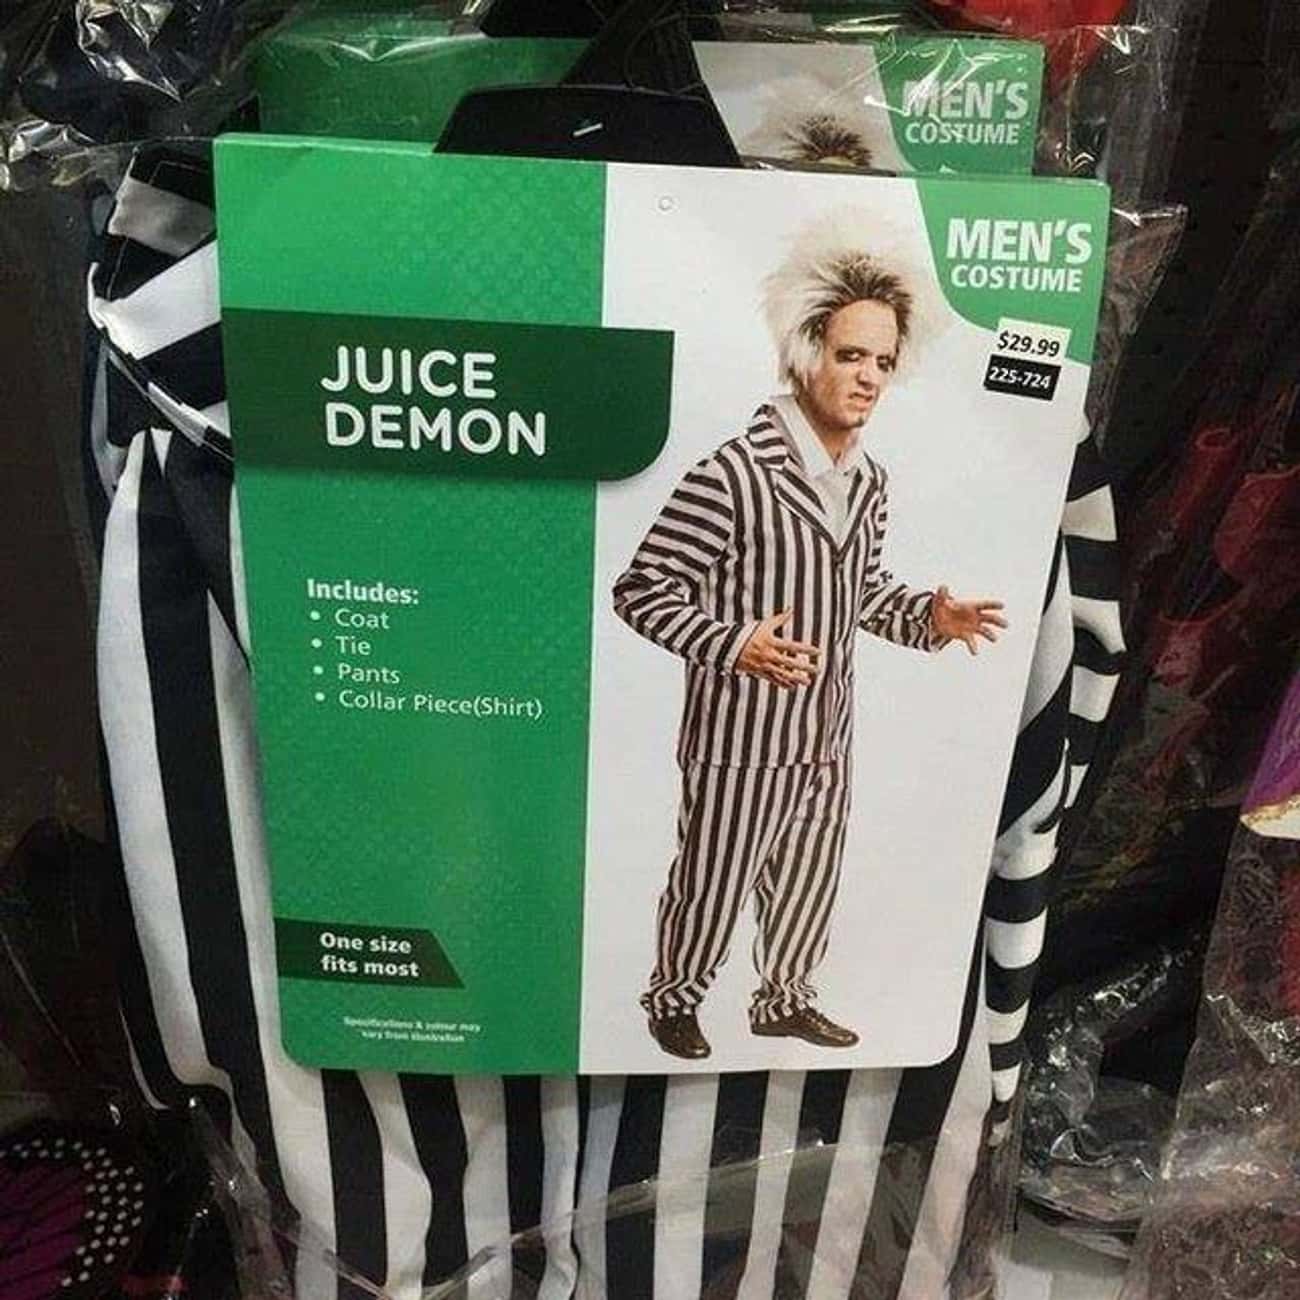 Juice Demon